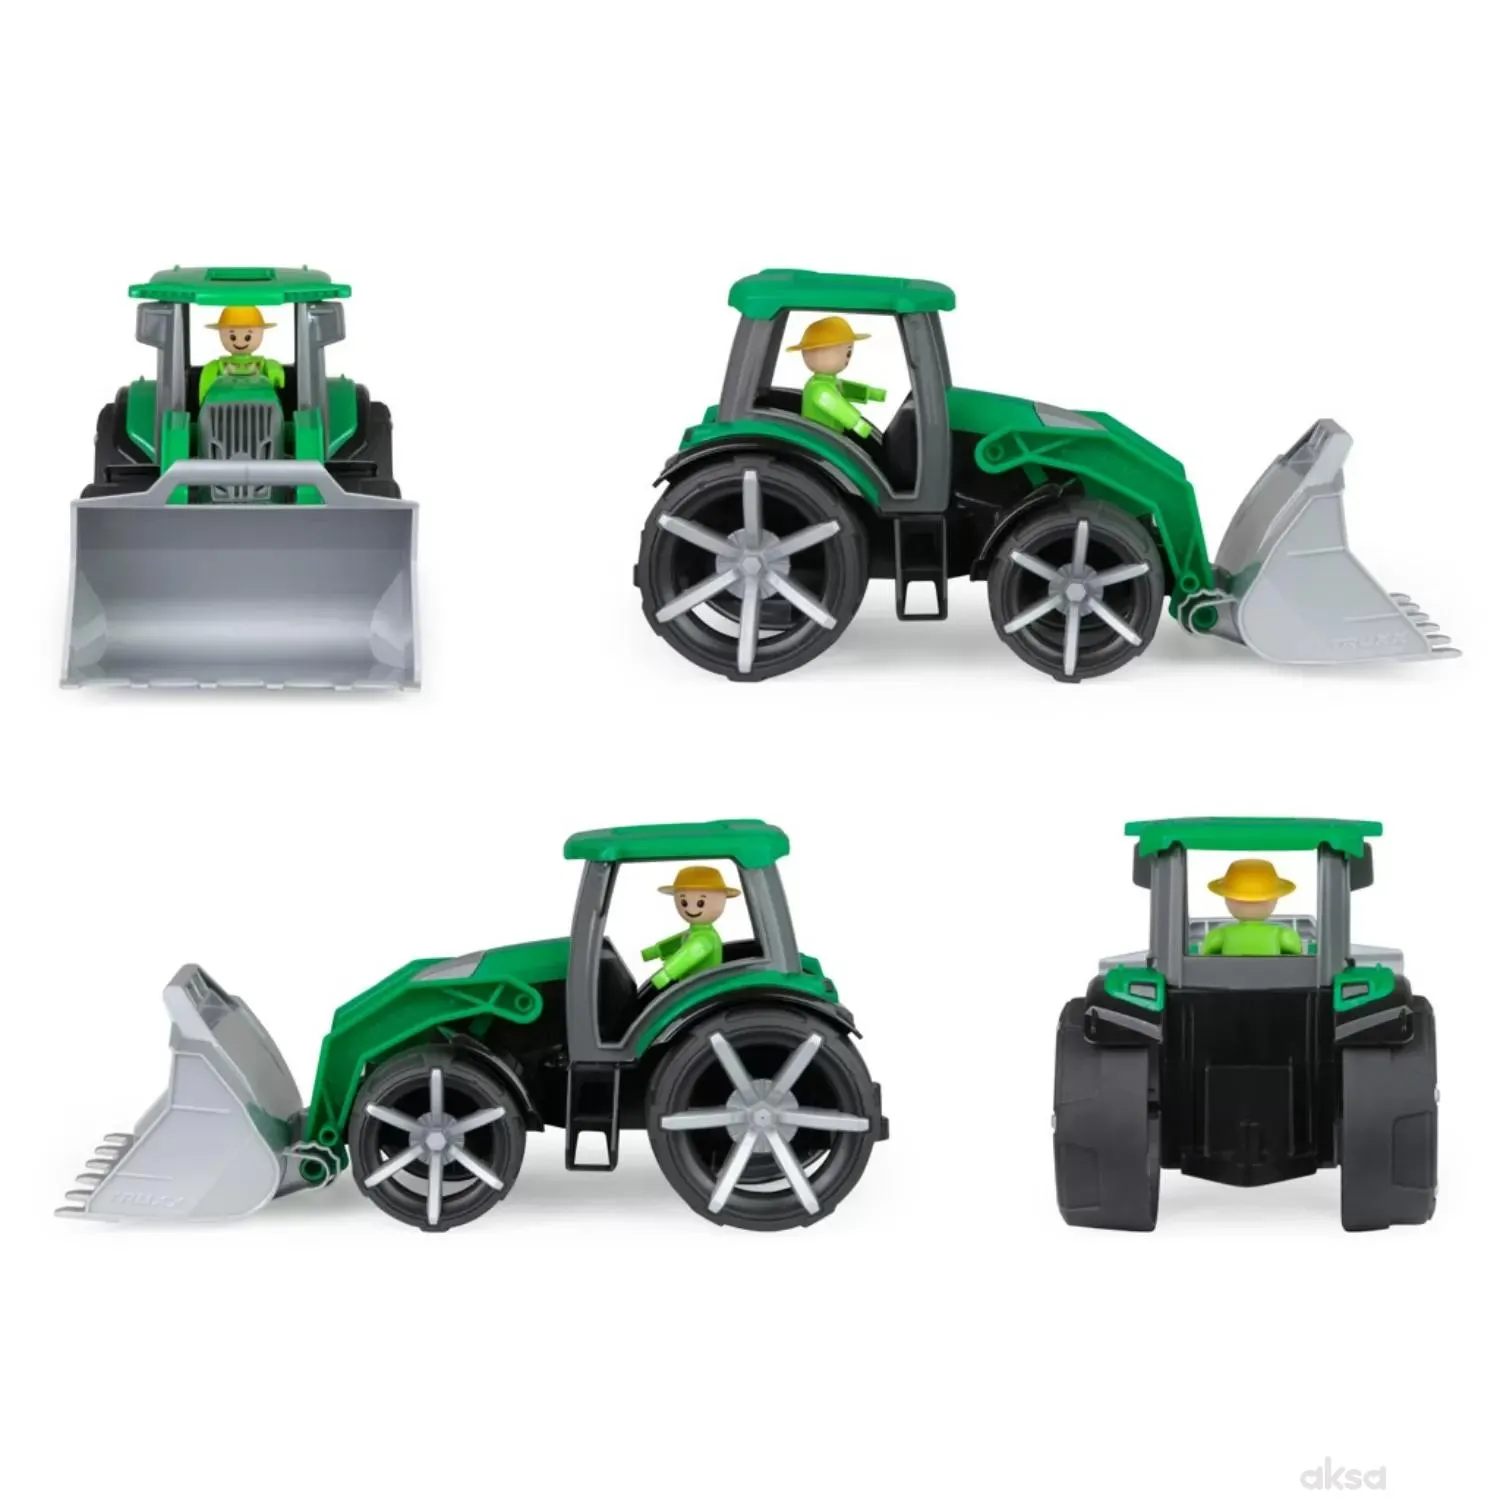 Lena igračka Truxx2 traktor 